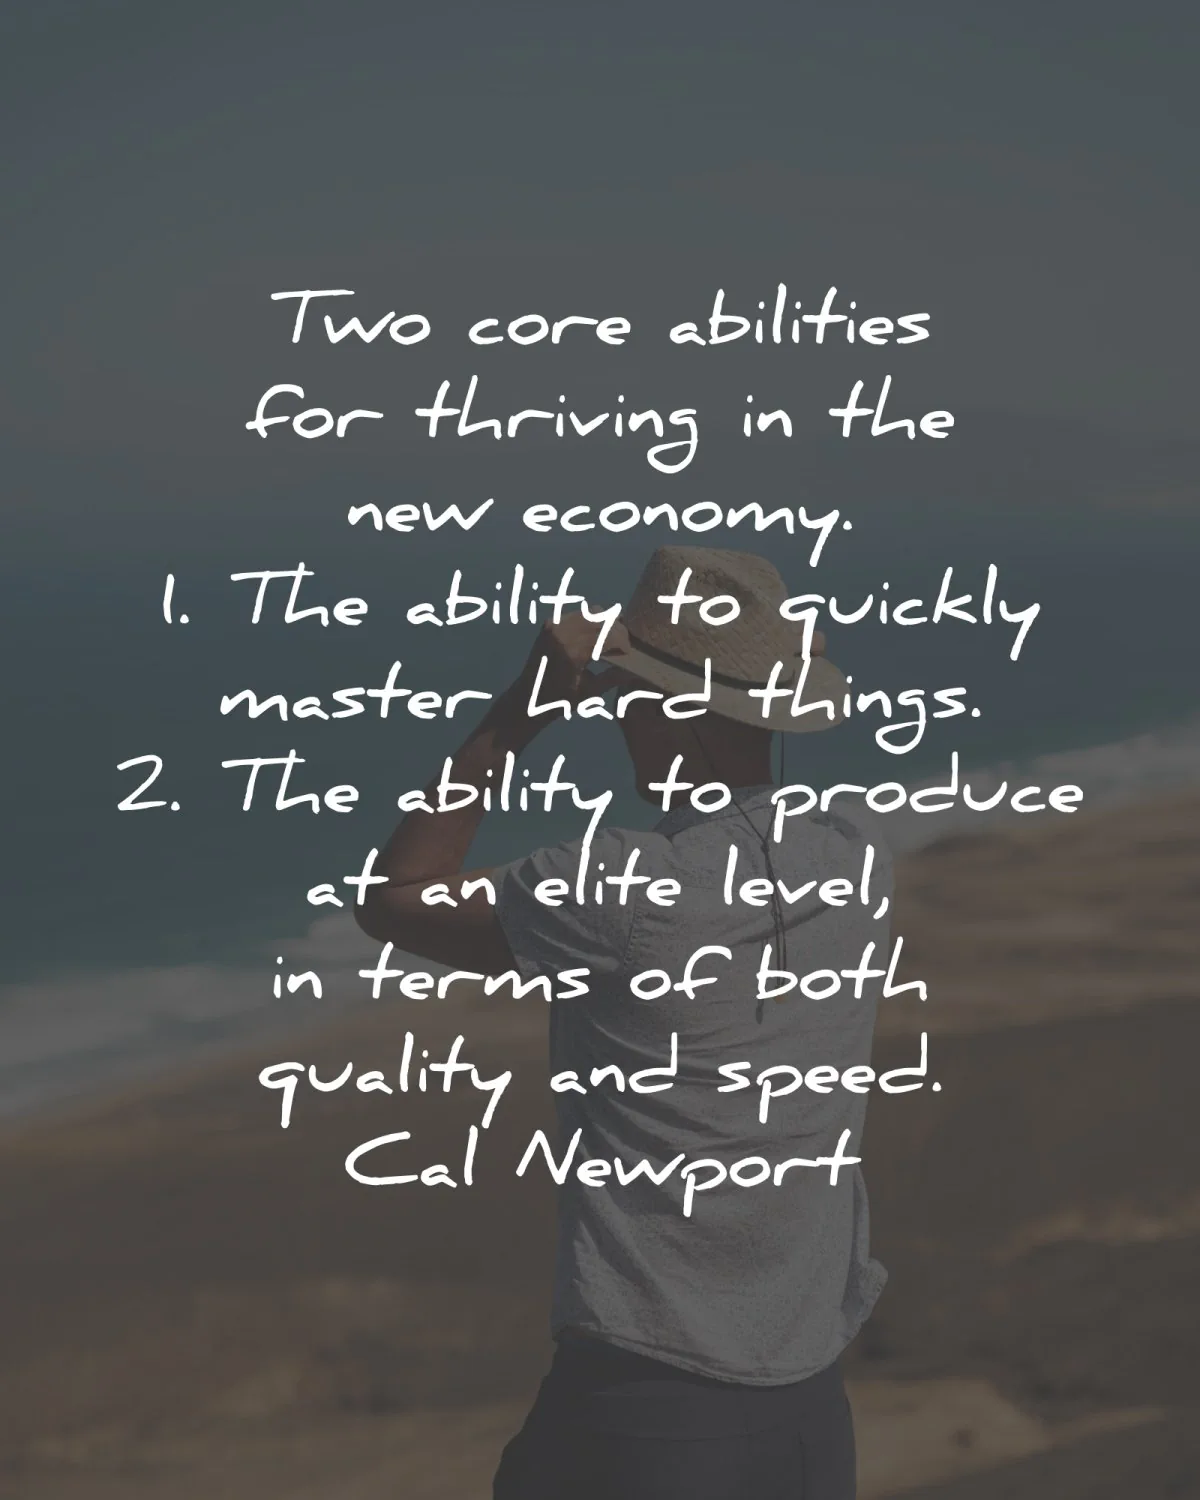 cal newport quotes abilities thriving economy wisdom